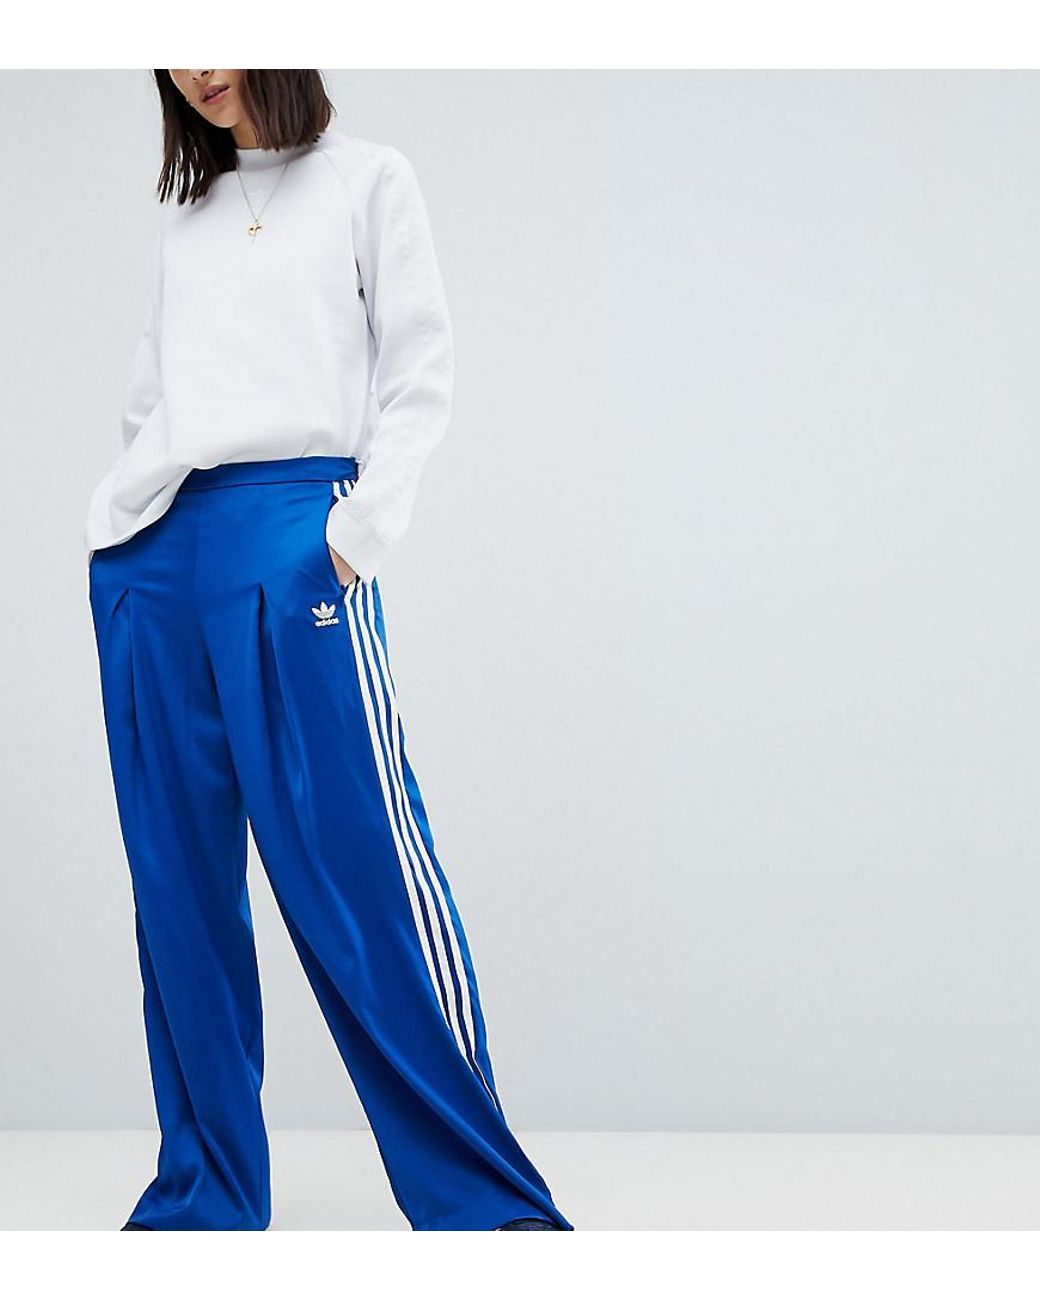 Zeebrasem Inademen meteoor adidas Originals Fashion League Wide Leg Track Pants In Bright Blue | Lyst